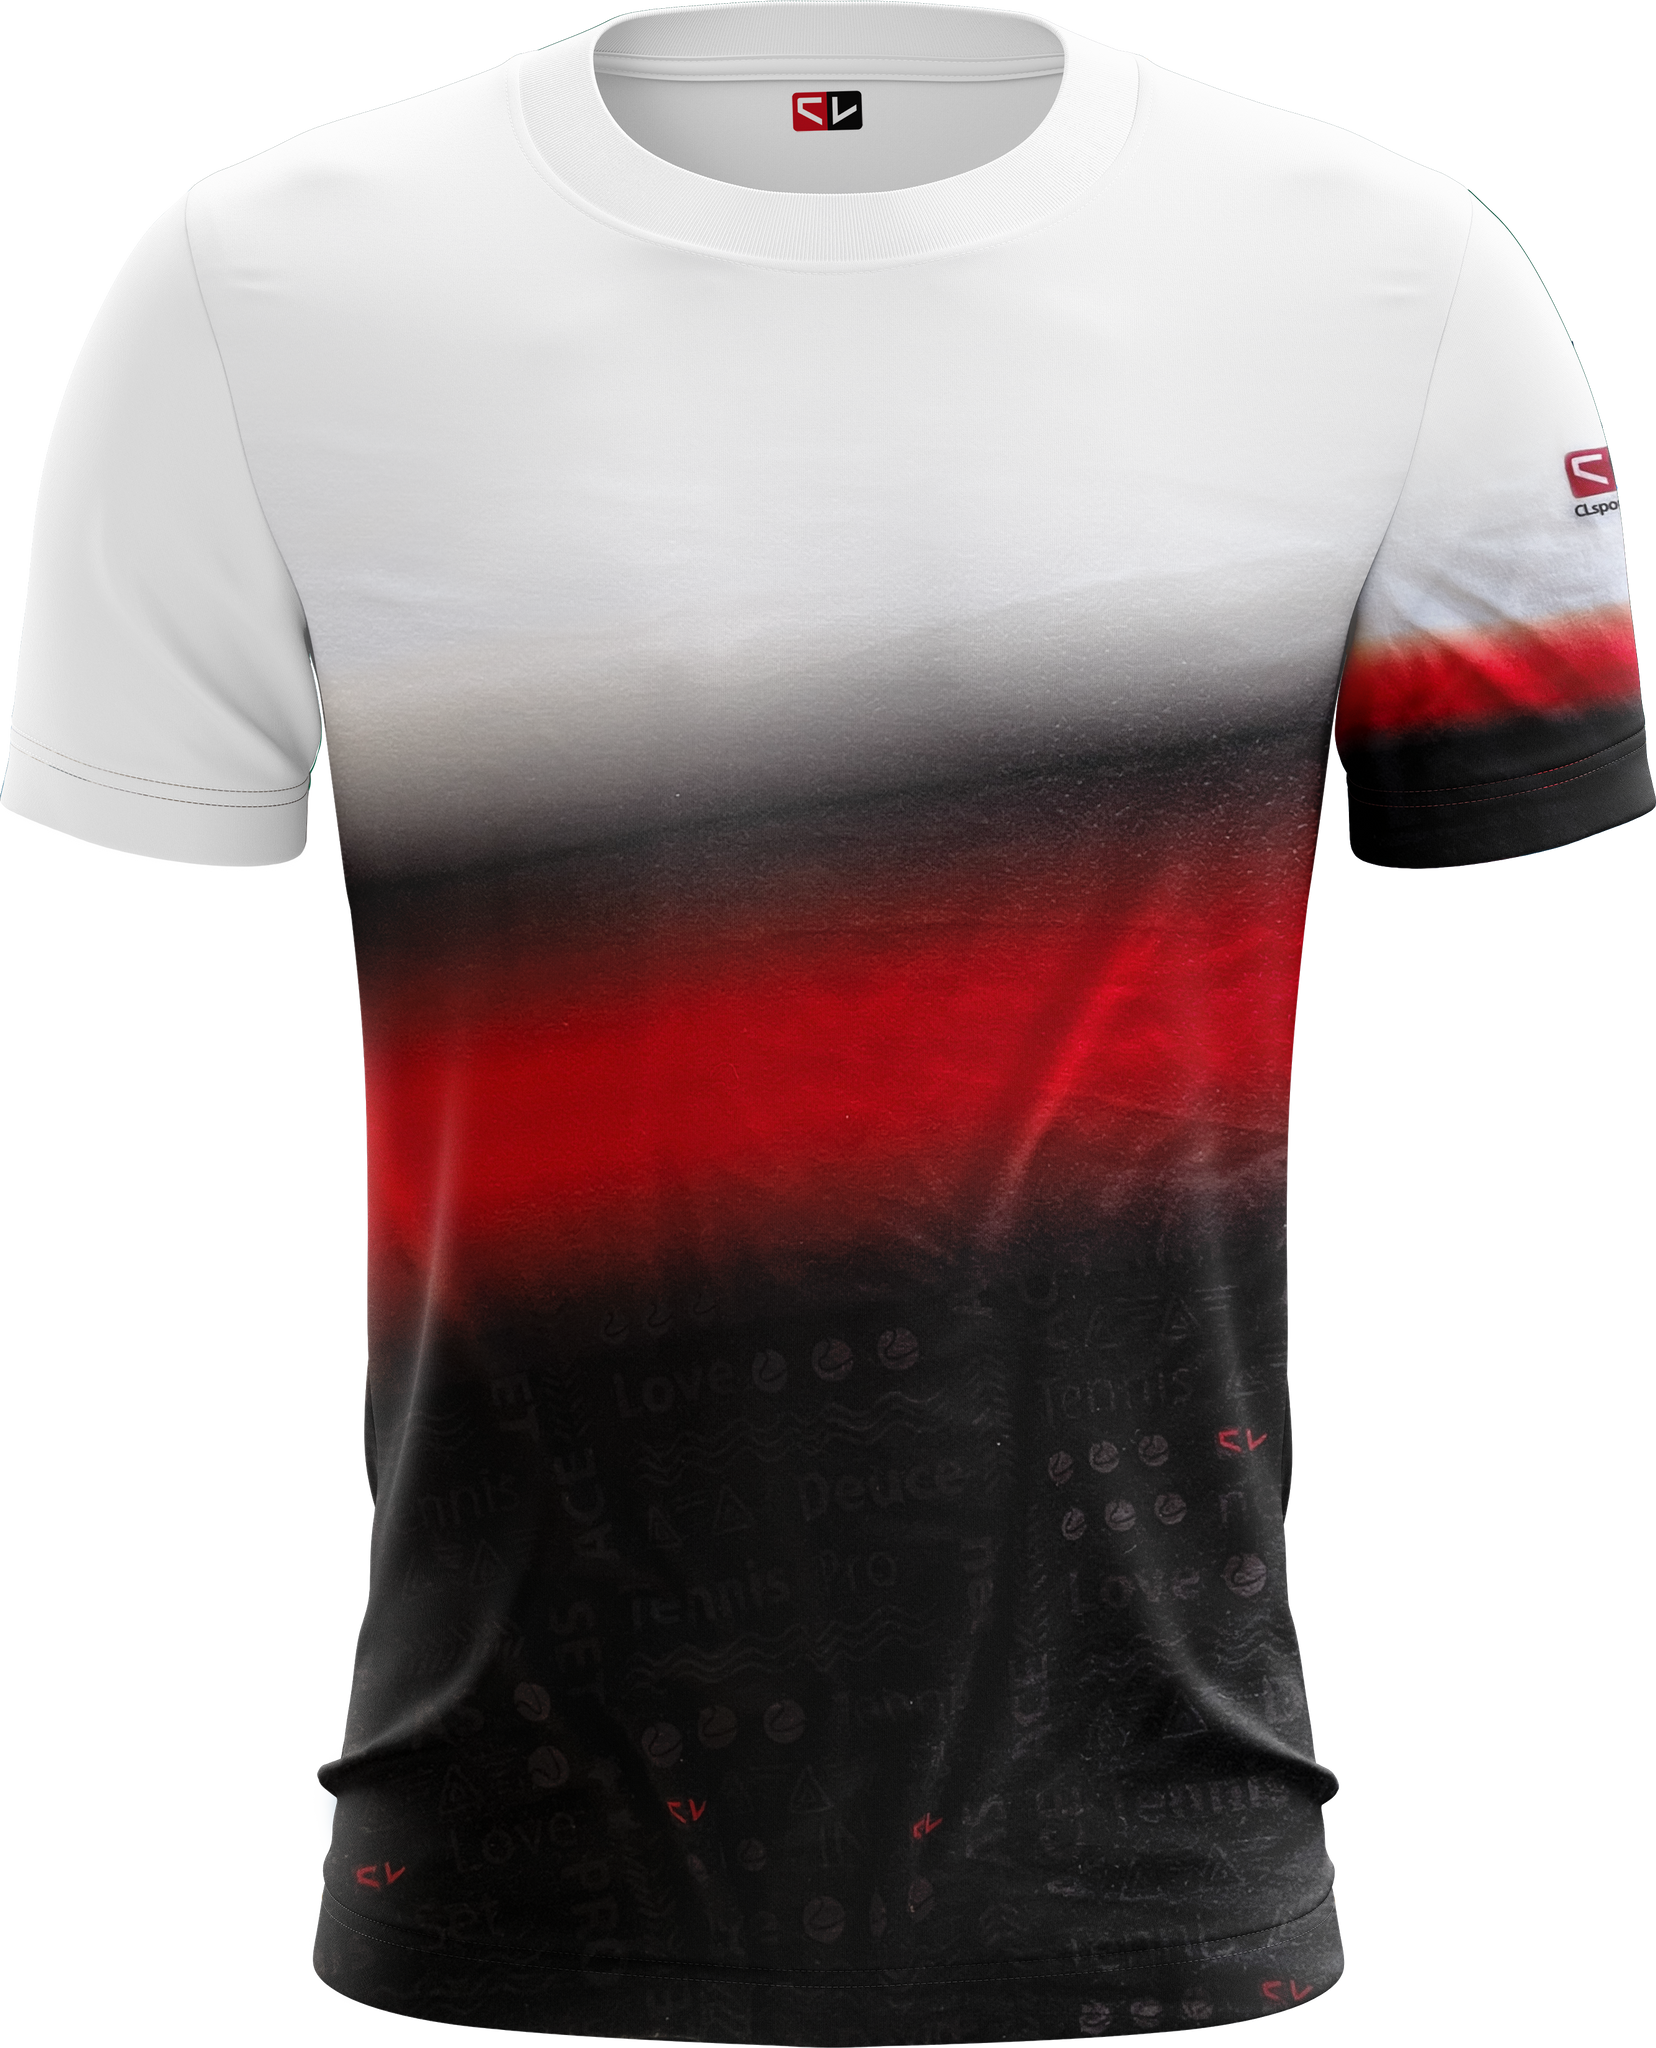 Tennis Corpo-red